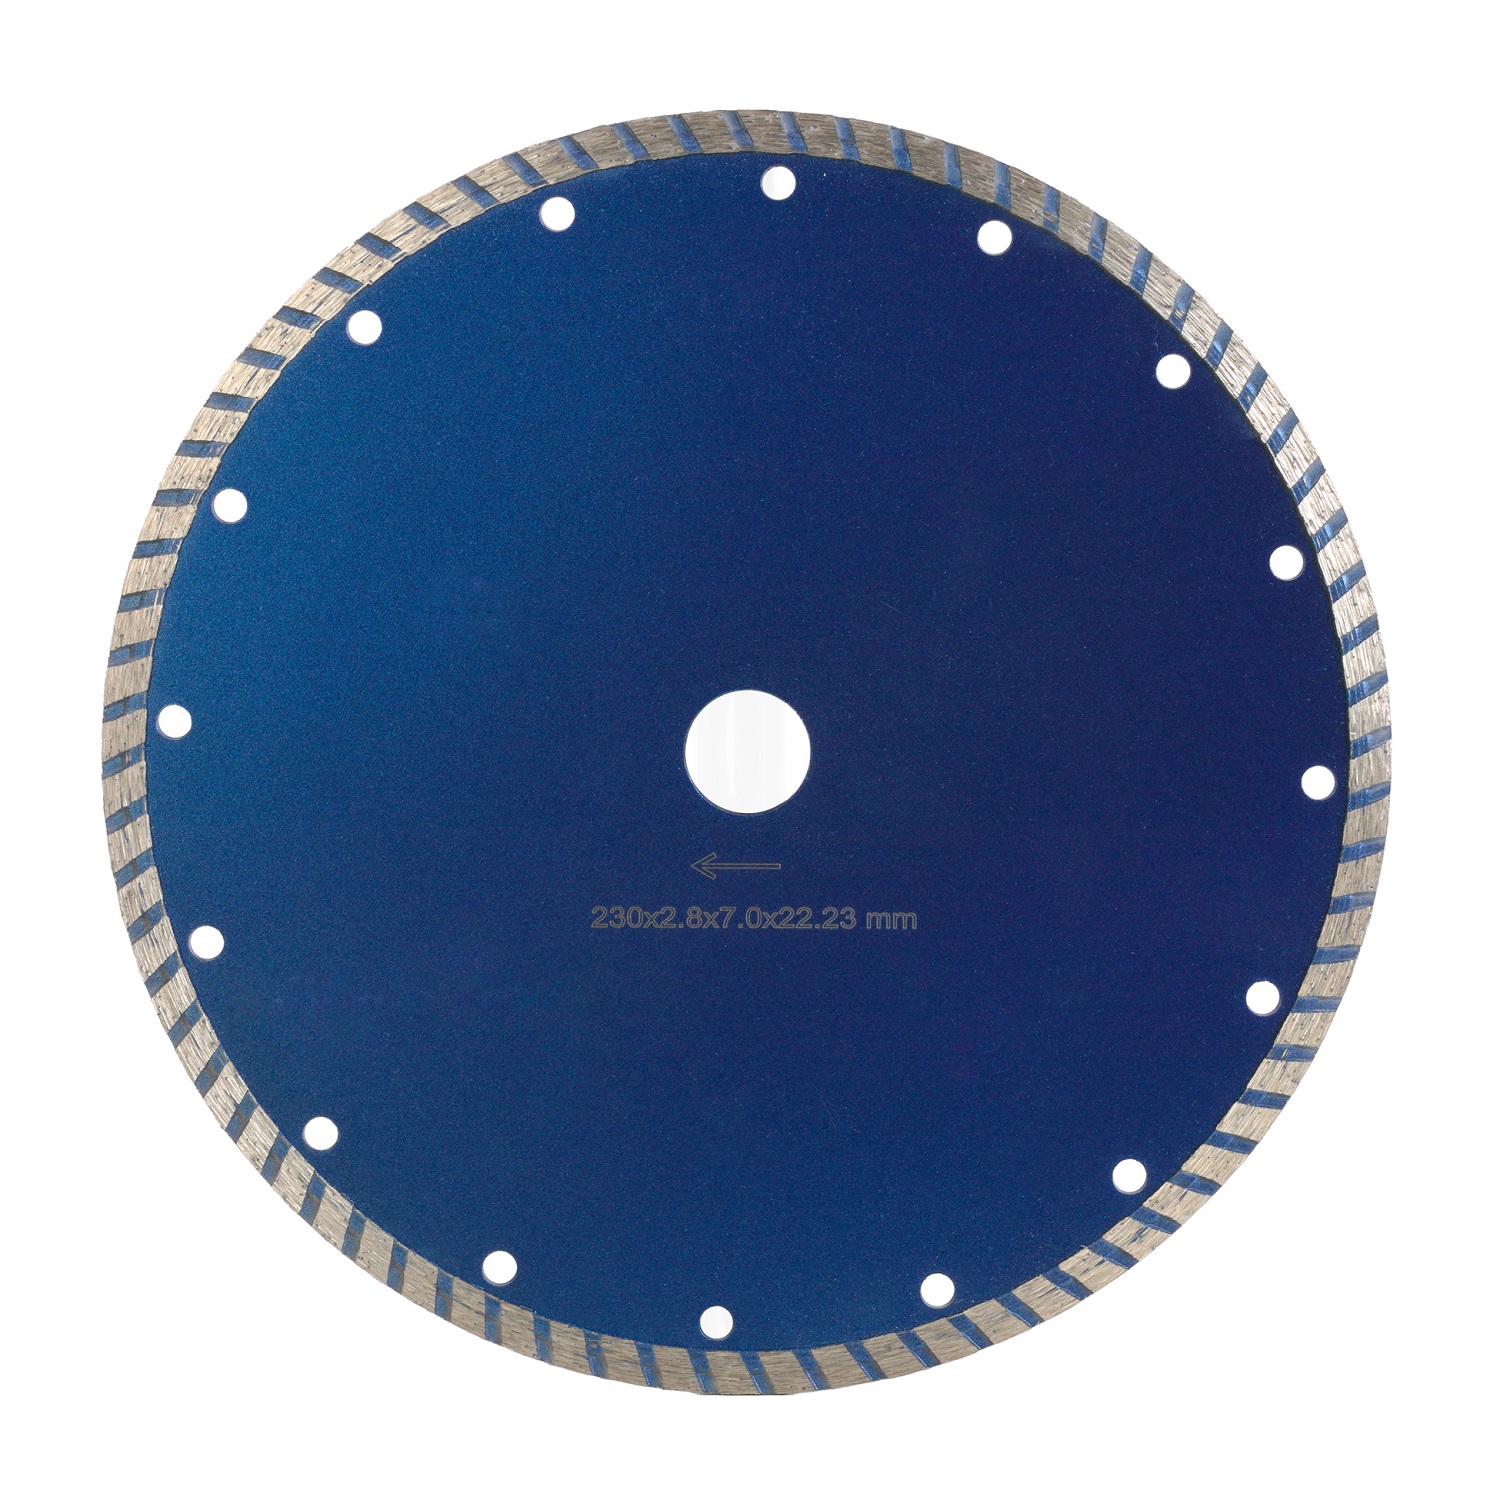 Диск турбо COBRA Standard д.230*22,2 (2,8*7)мм | универсал/dry DIAMASTER диск сегментный laser ultra д 450 2 8 25 4 40 4 0 10 мм 32z железобетон wet dry diamaster